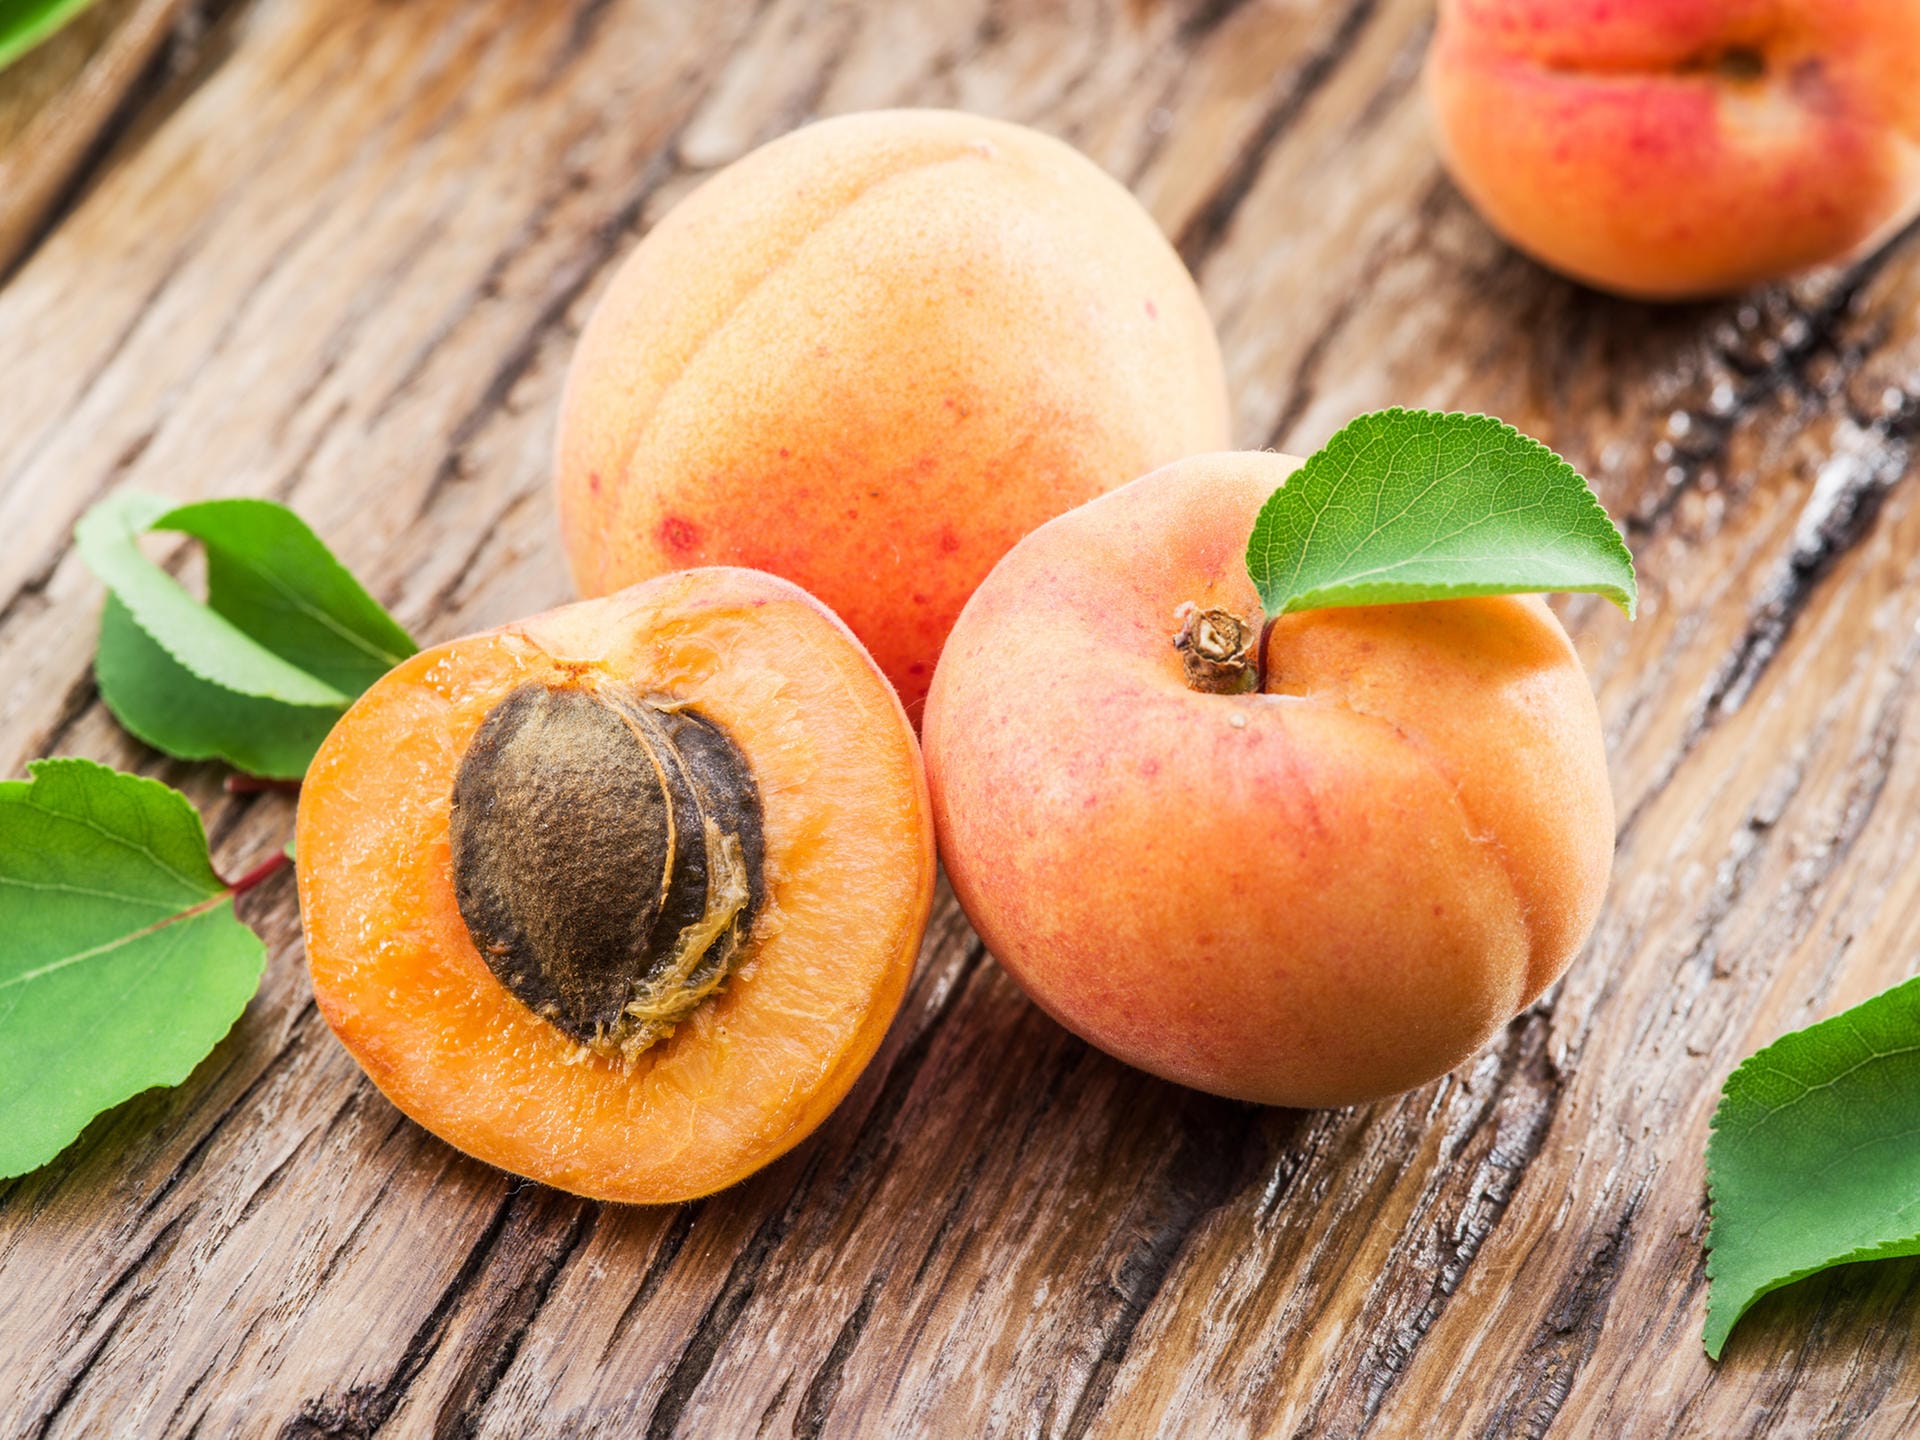 Diese Lebensmittel enthalten Giftstoffe: Aprikosenkern